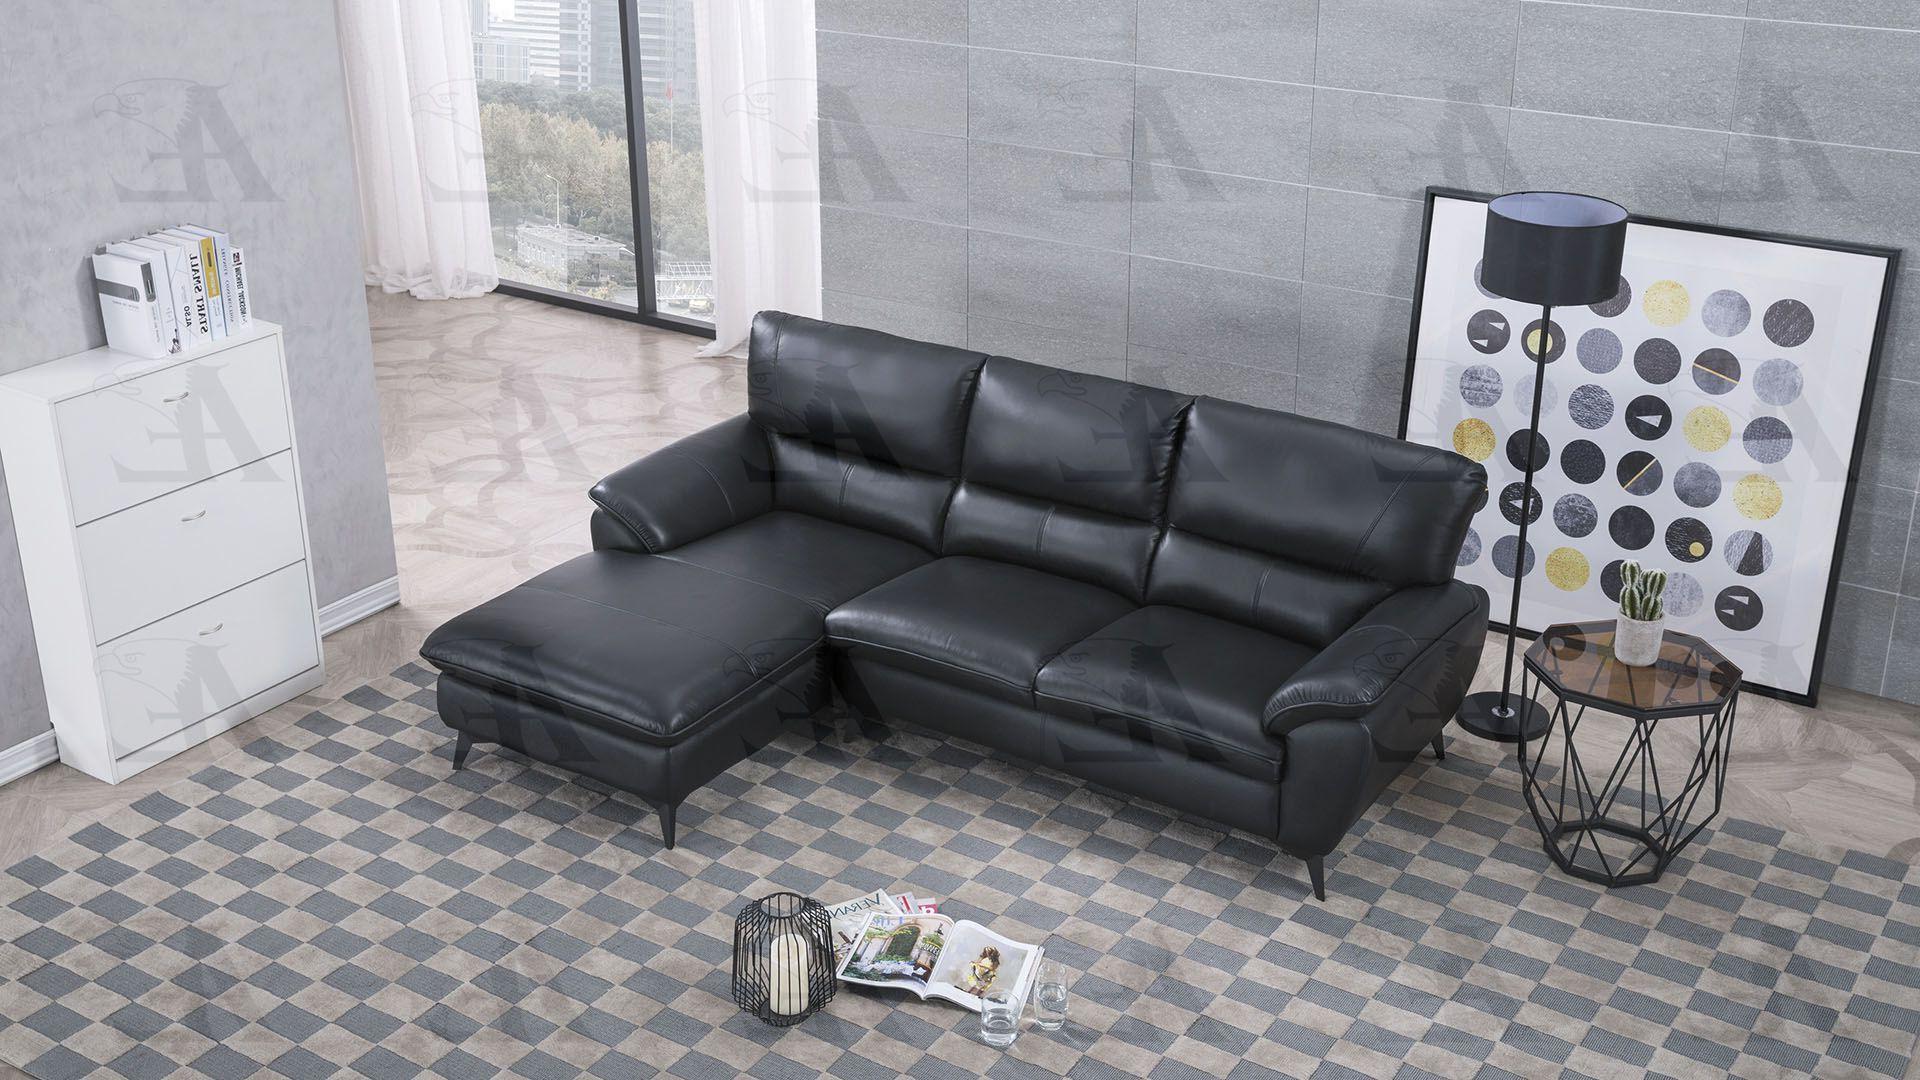 

    
American Eagle Furniture EK-L153-BK Sectional Sofa Black EK-L153L-BK
